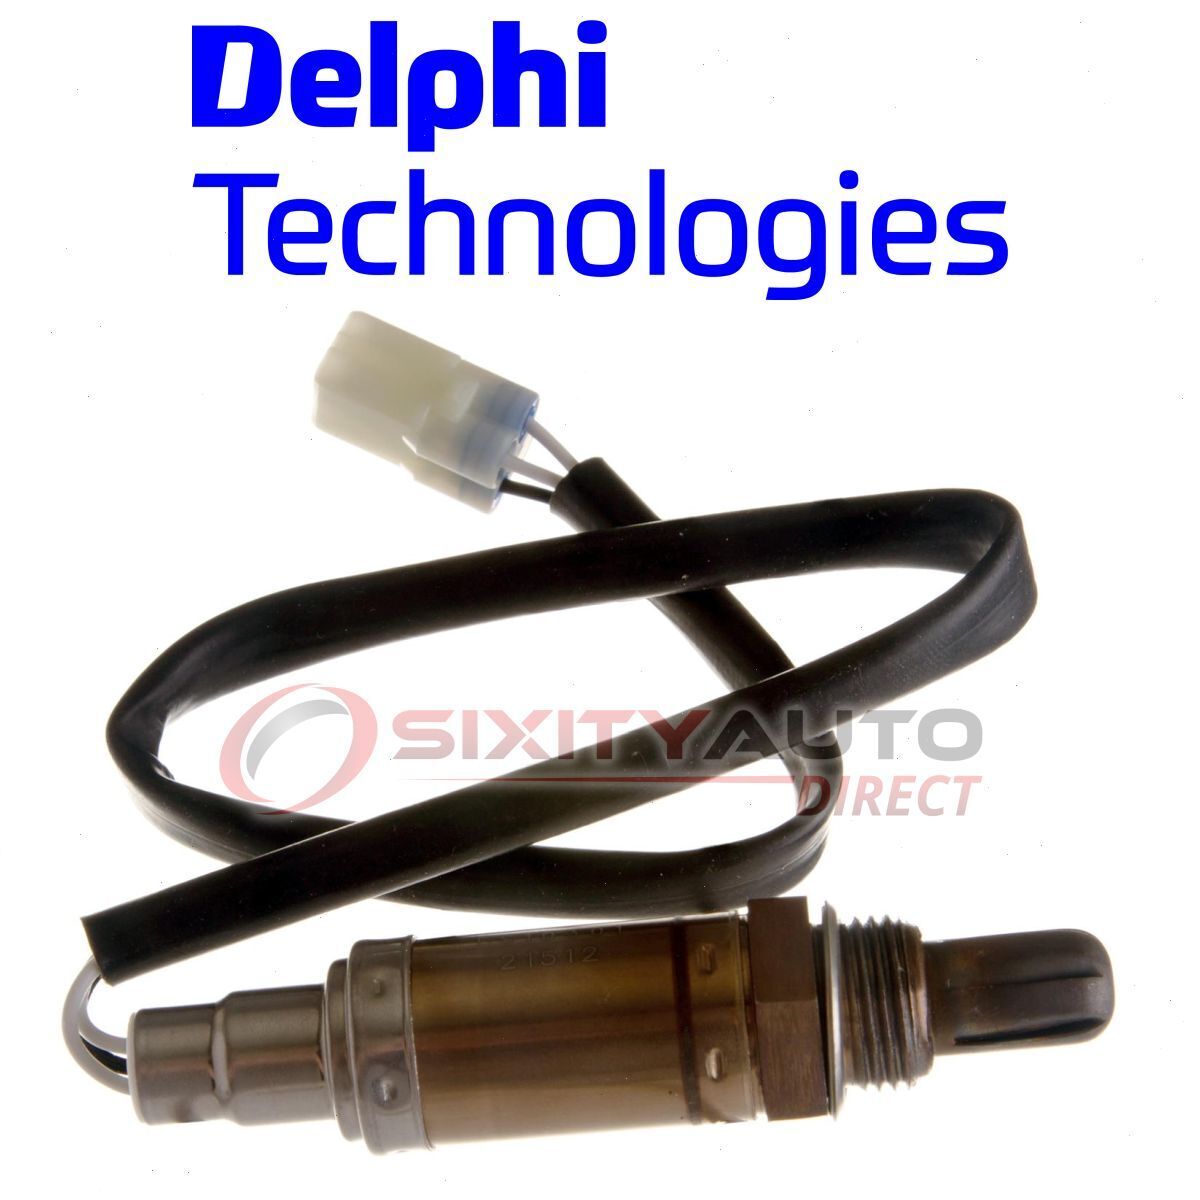 Delphi Downstream Oxygen Sensor for 1996-1997 Subaru SVX Exhaust Emissions ap